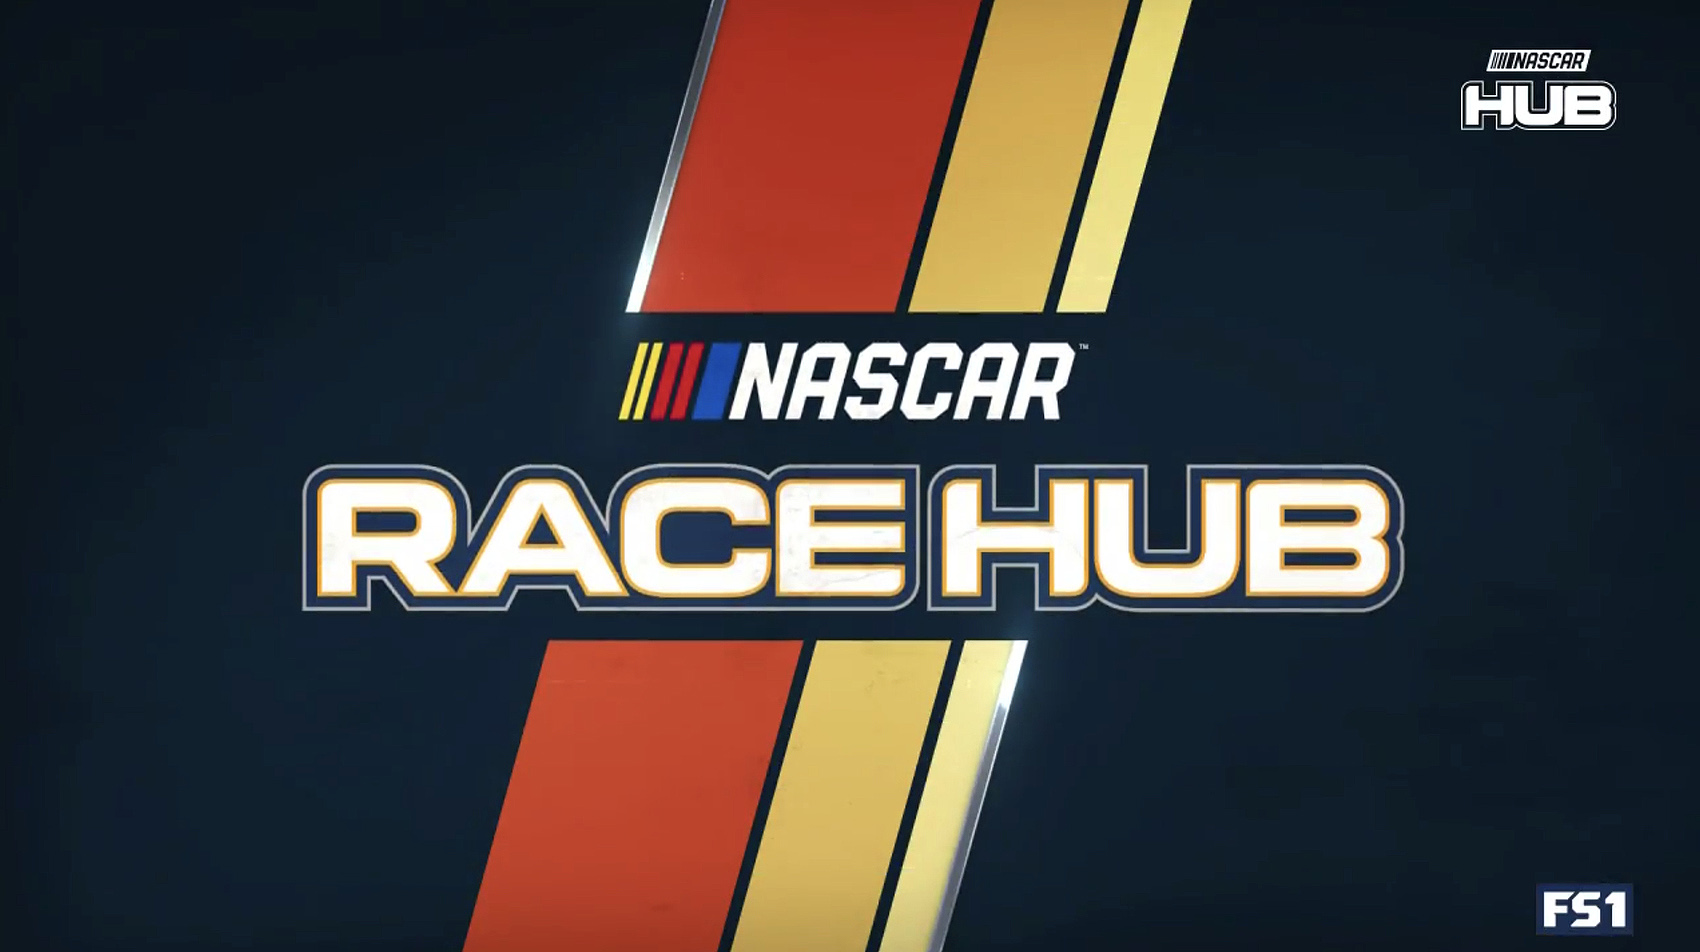 NCS_NASCAR-FOX-2019-BROADCAST-DESIGN_016